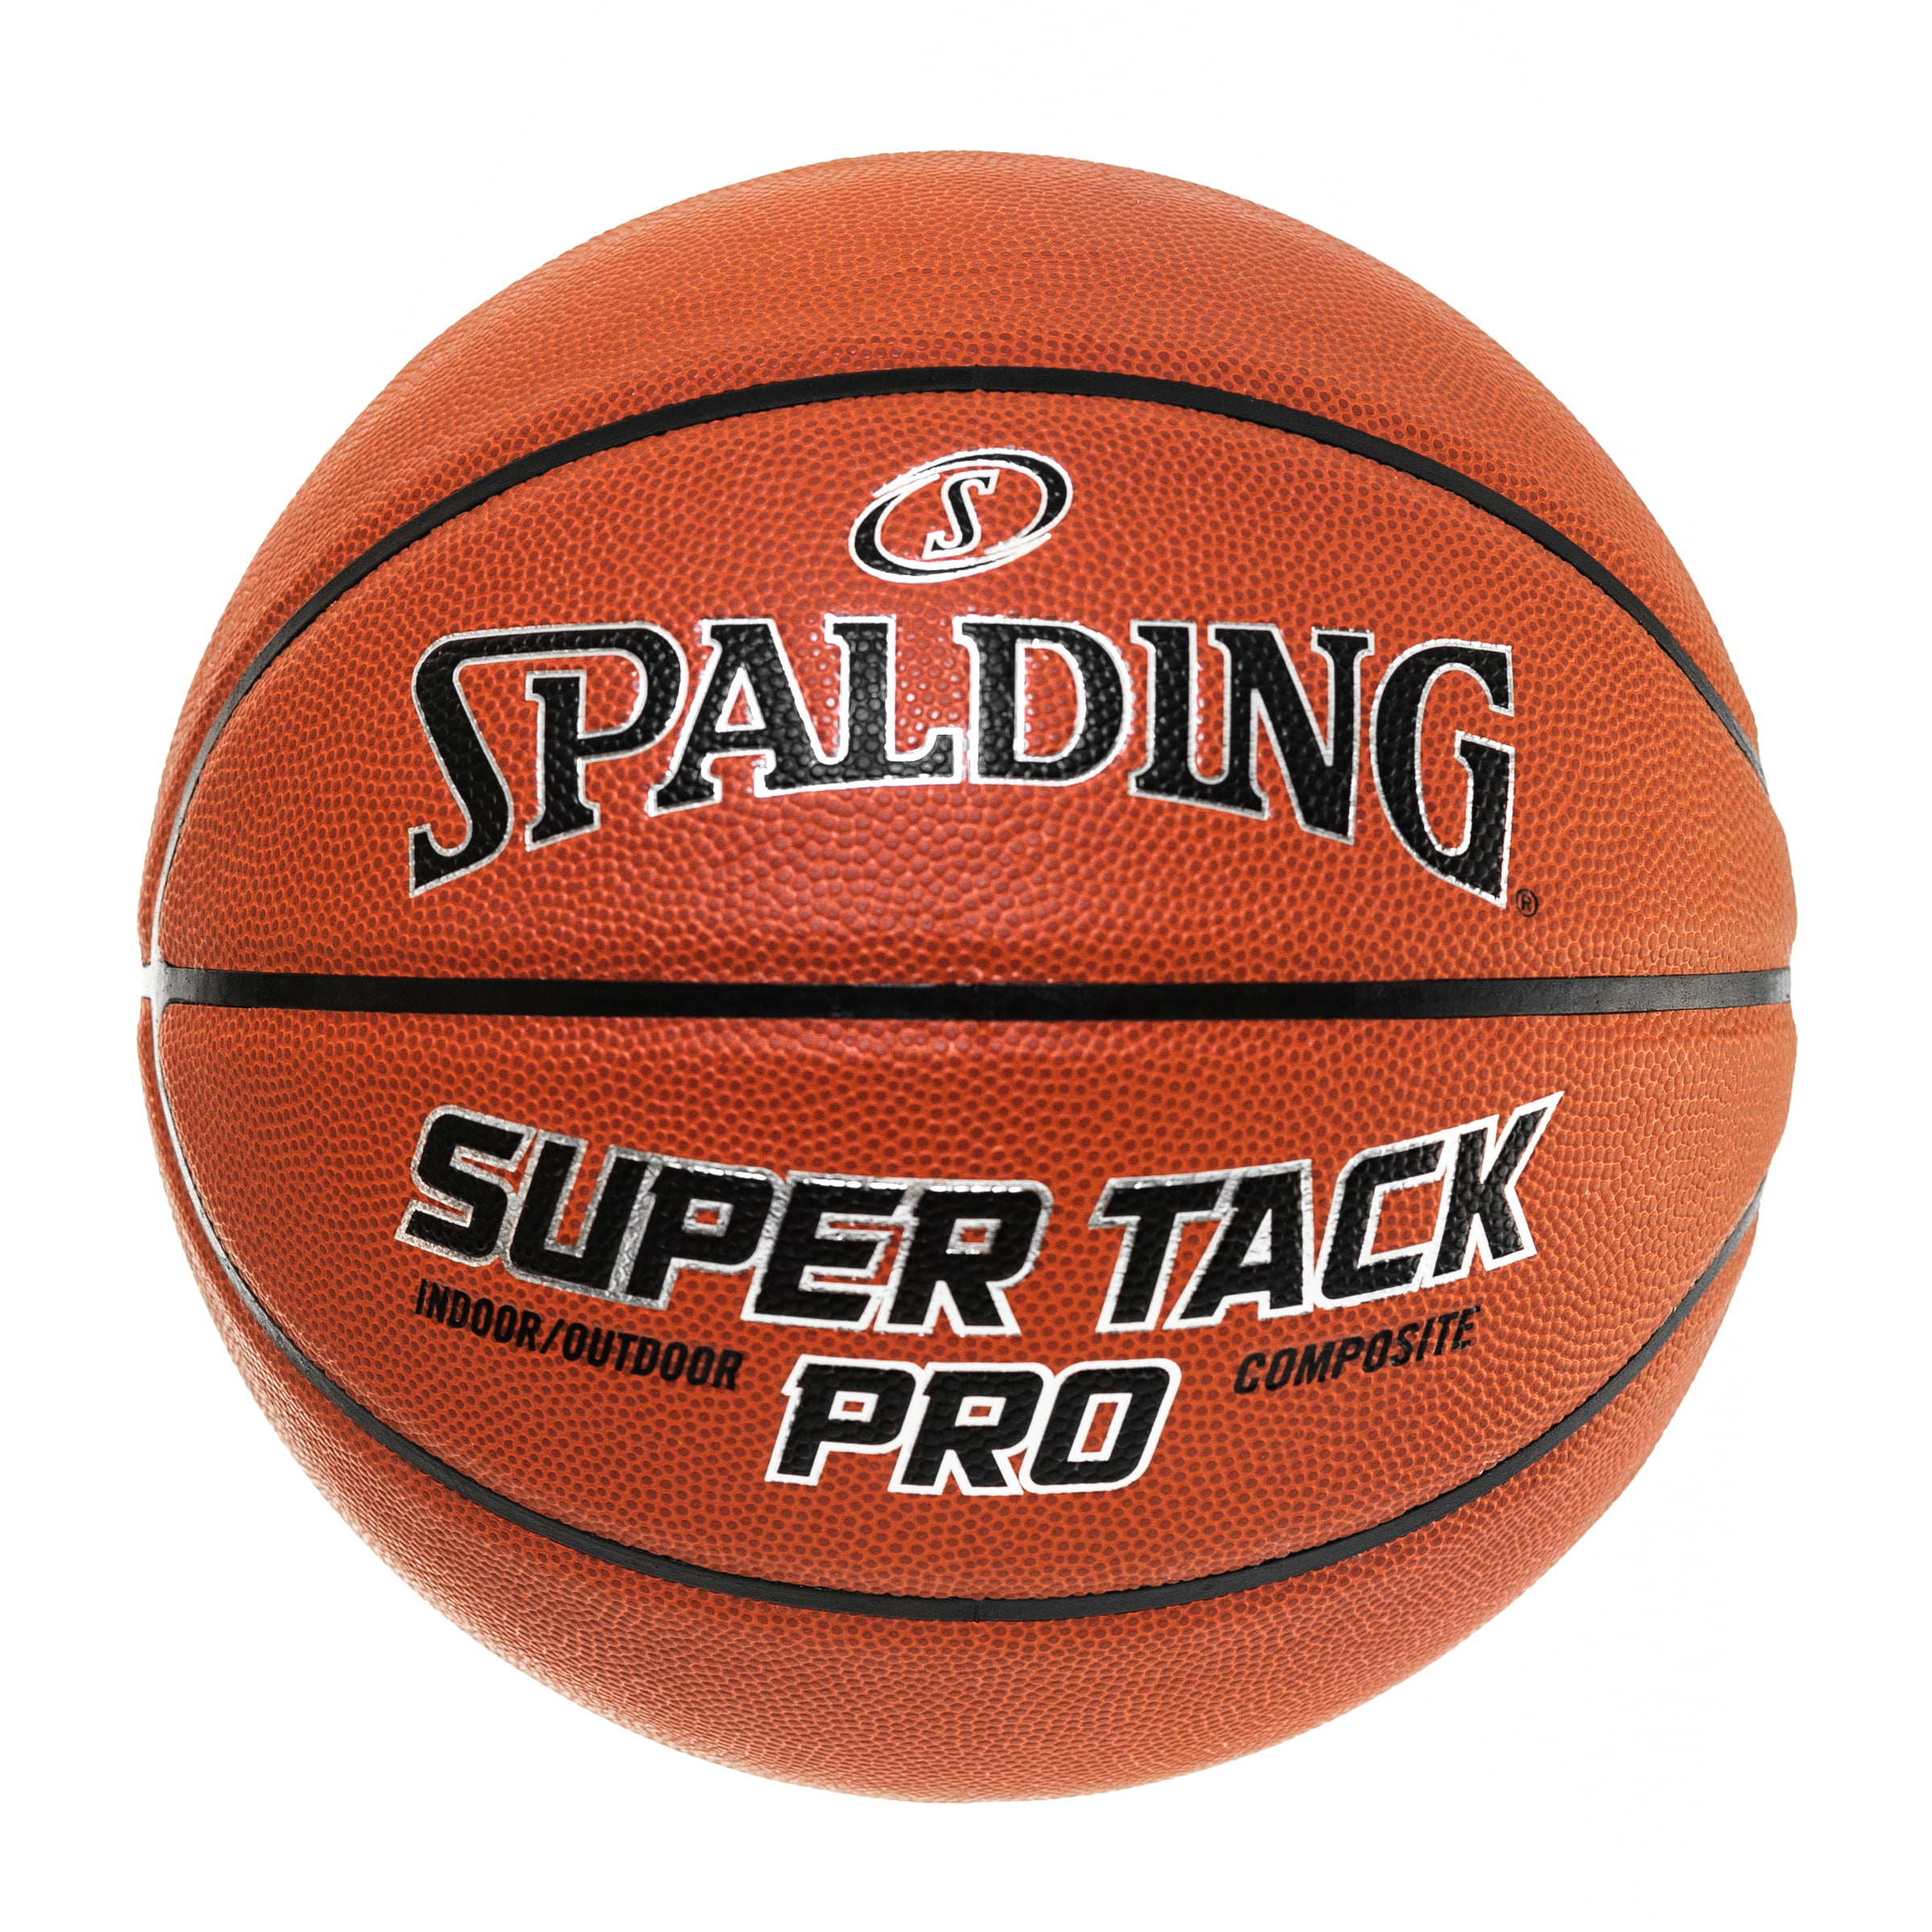 Spalding Super Tack Pro Indoor/Outdoor Basketball - Walmart.com ...